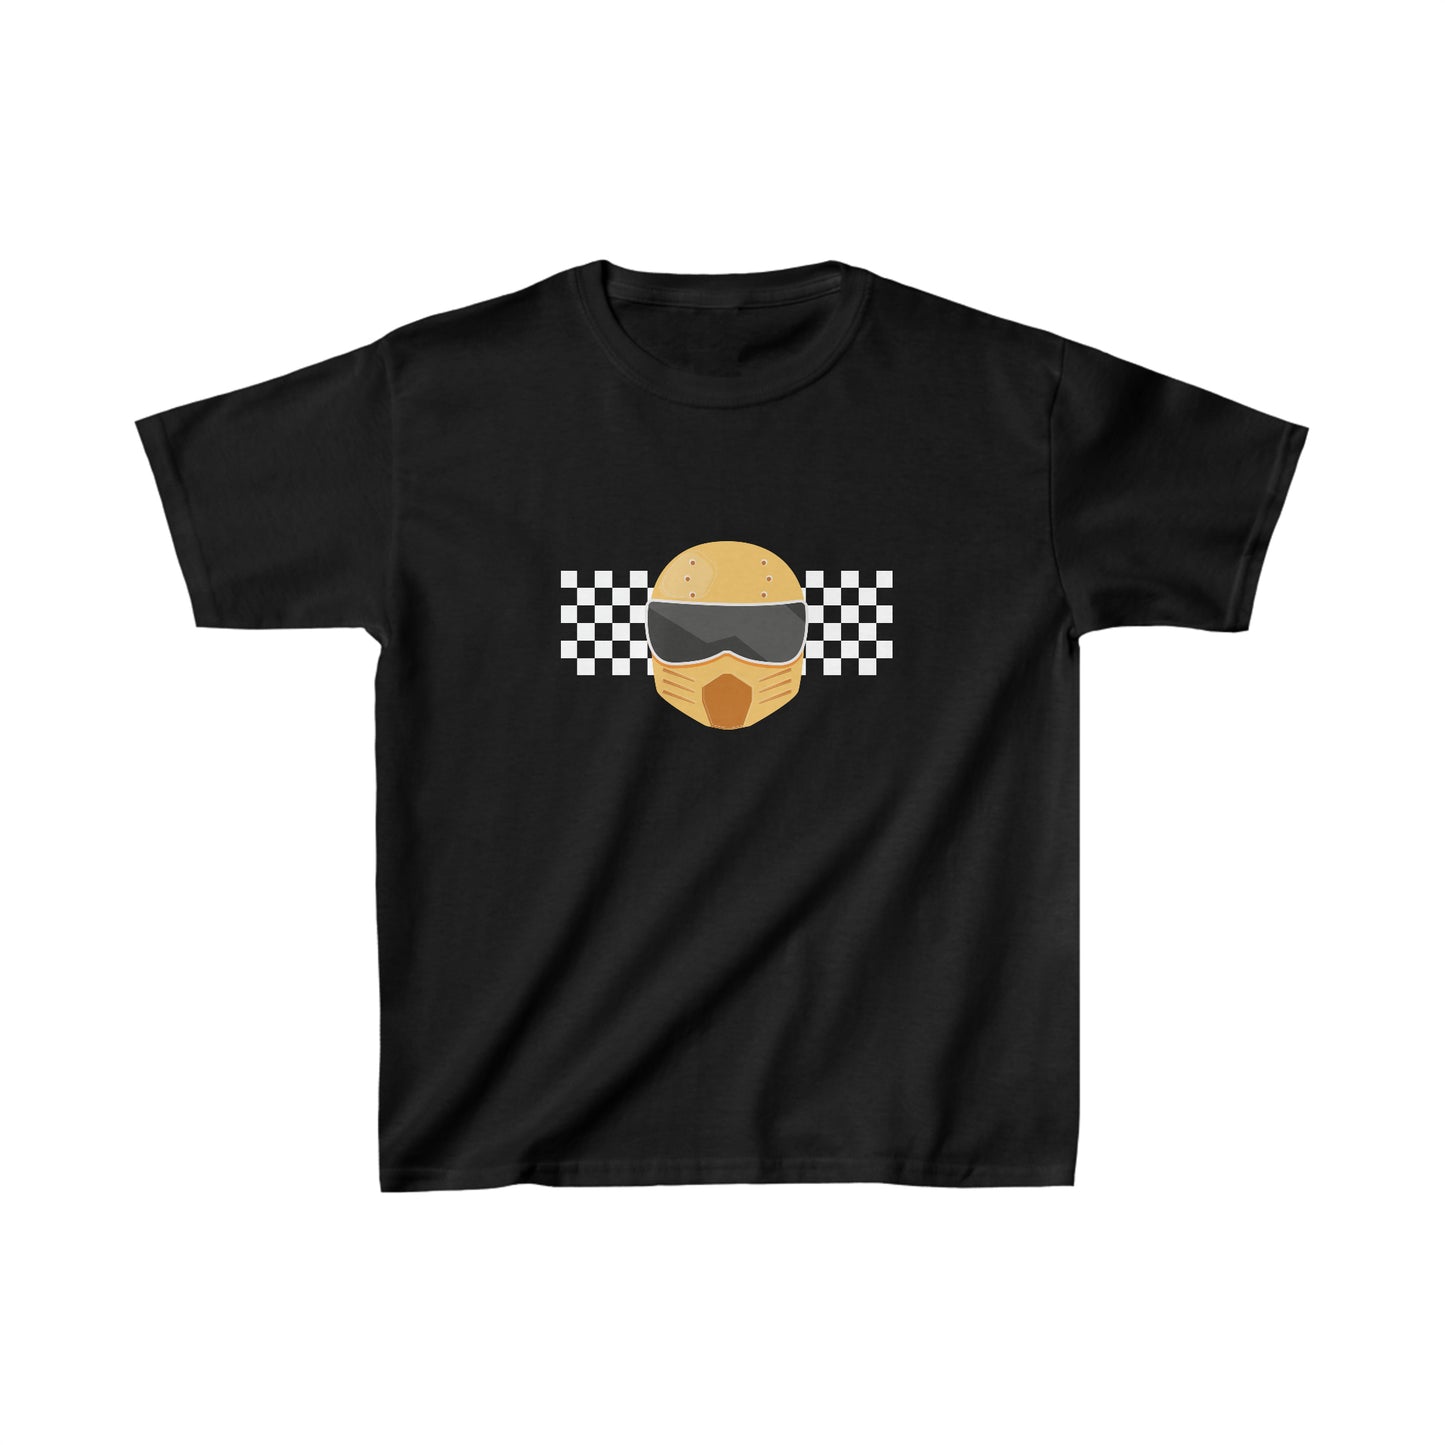 Racing Helmet - YOUTH T-Shirt